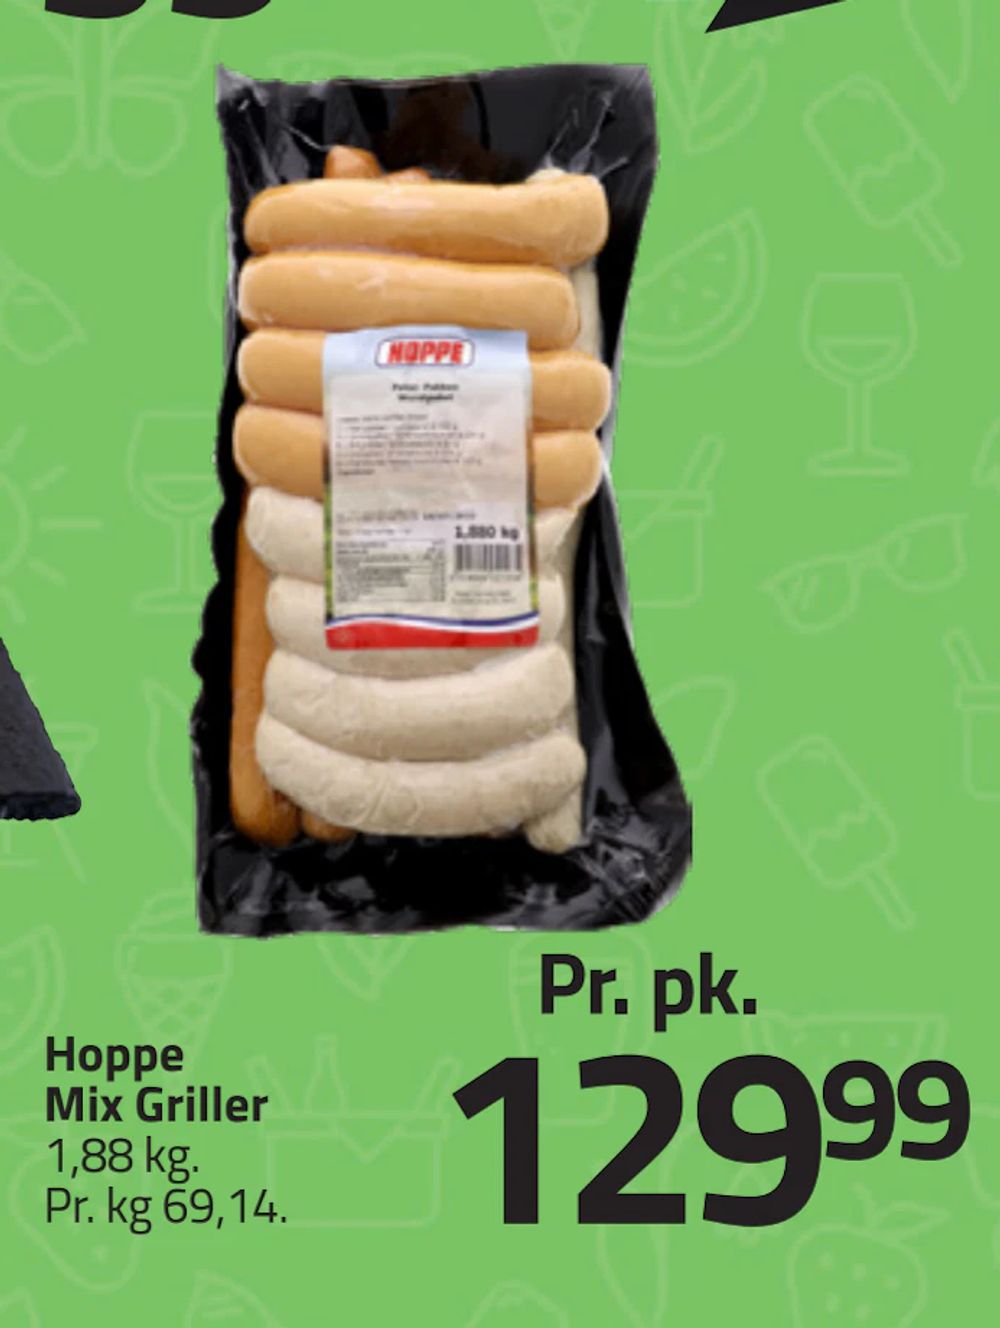 Tilbud på Hoppe Mix Griller fra Fleggaard til 129,99 kr.